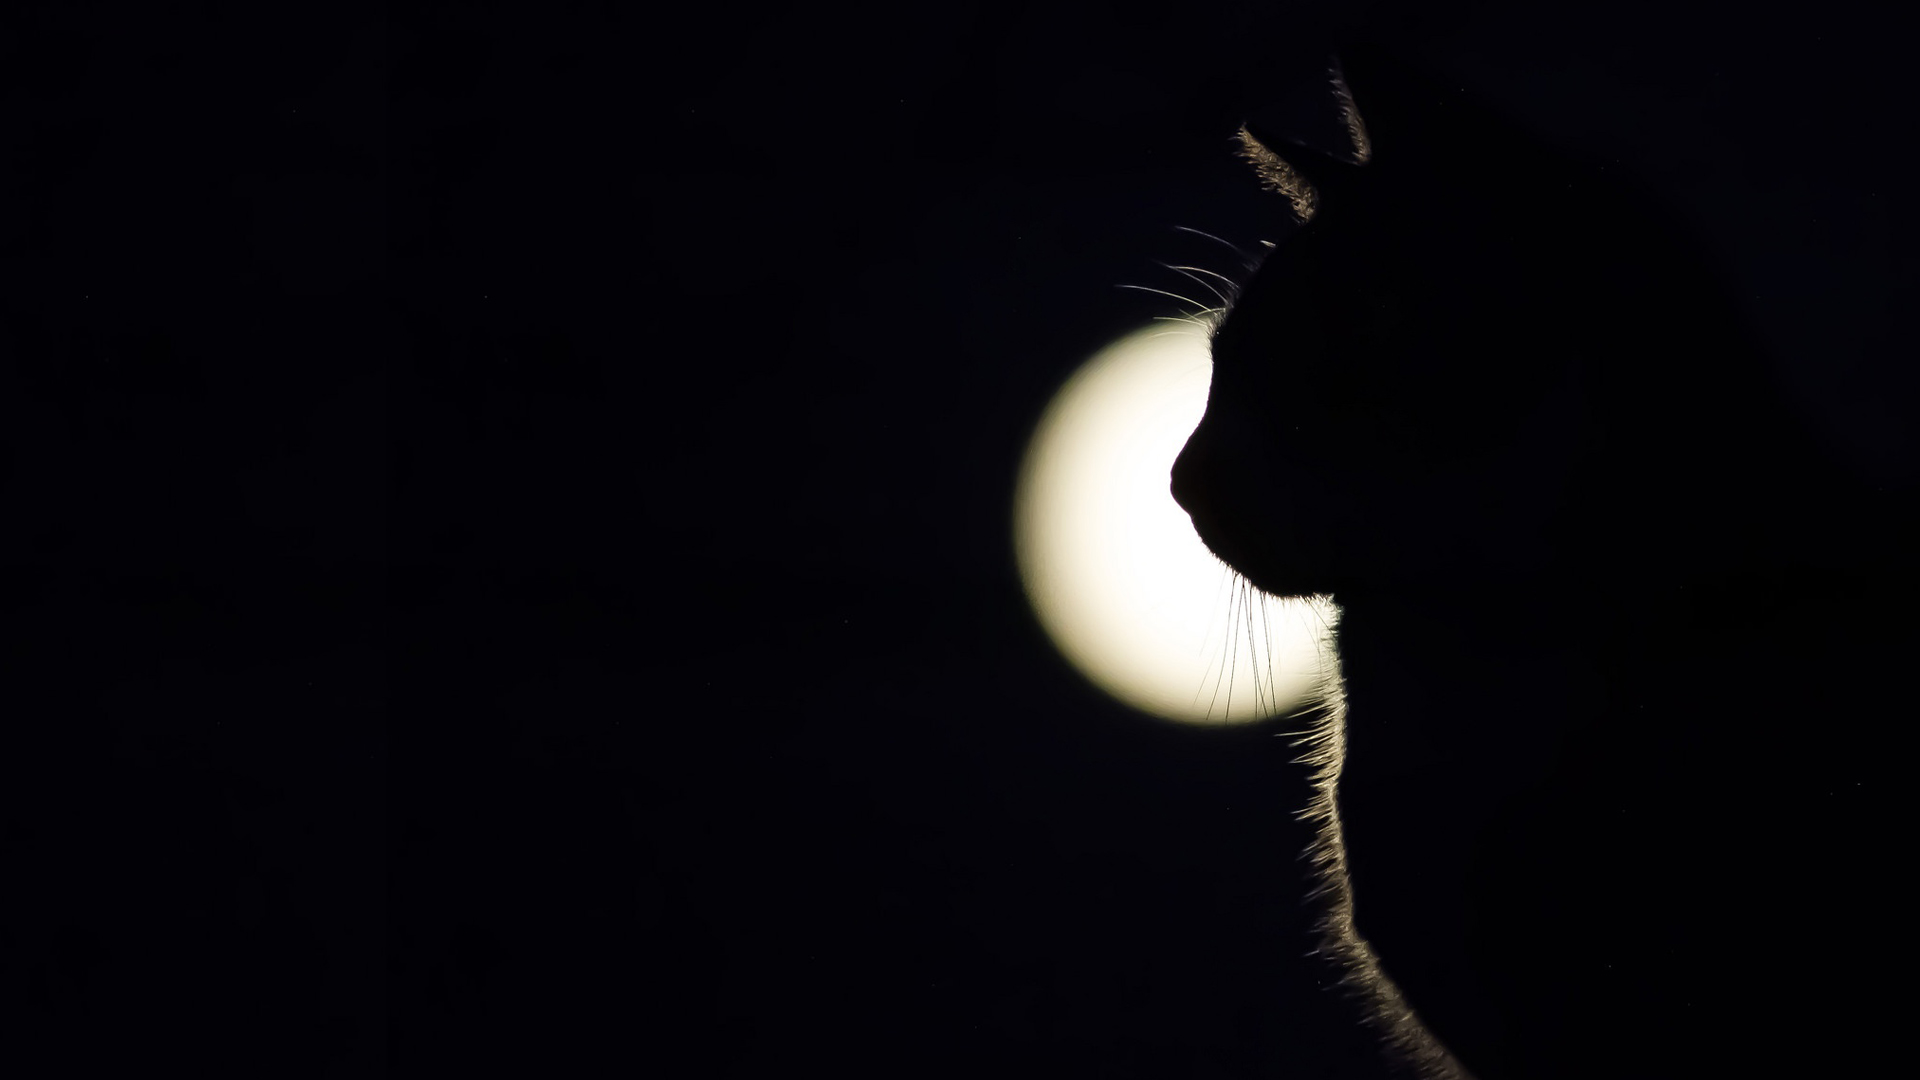 General 1920x1080 animals silhouette feline mammals Moon outdoors nature low light closeup night cats backlighting lights dark background fur